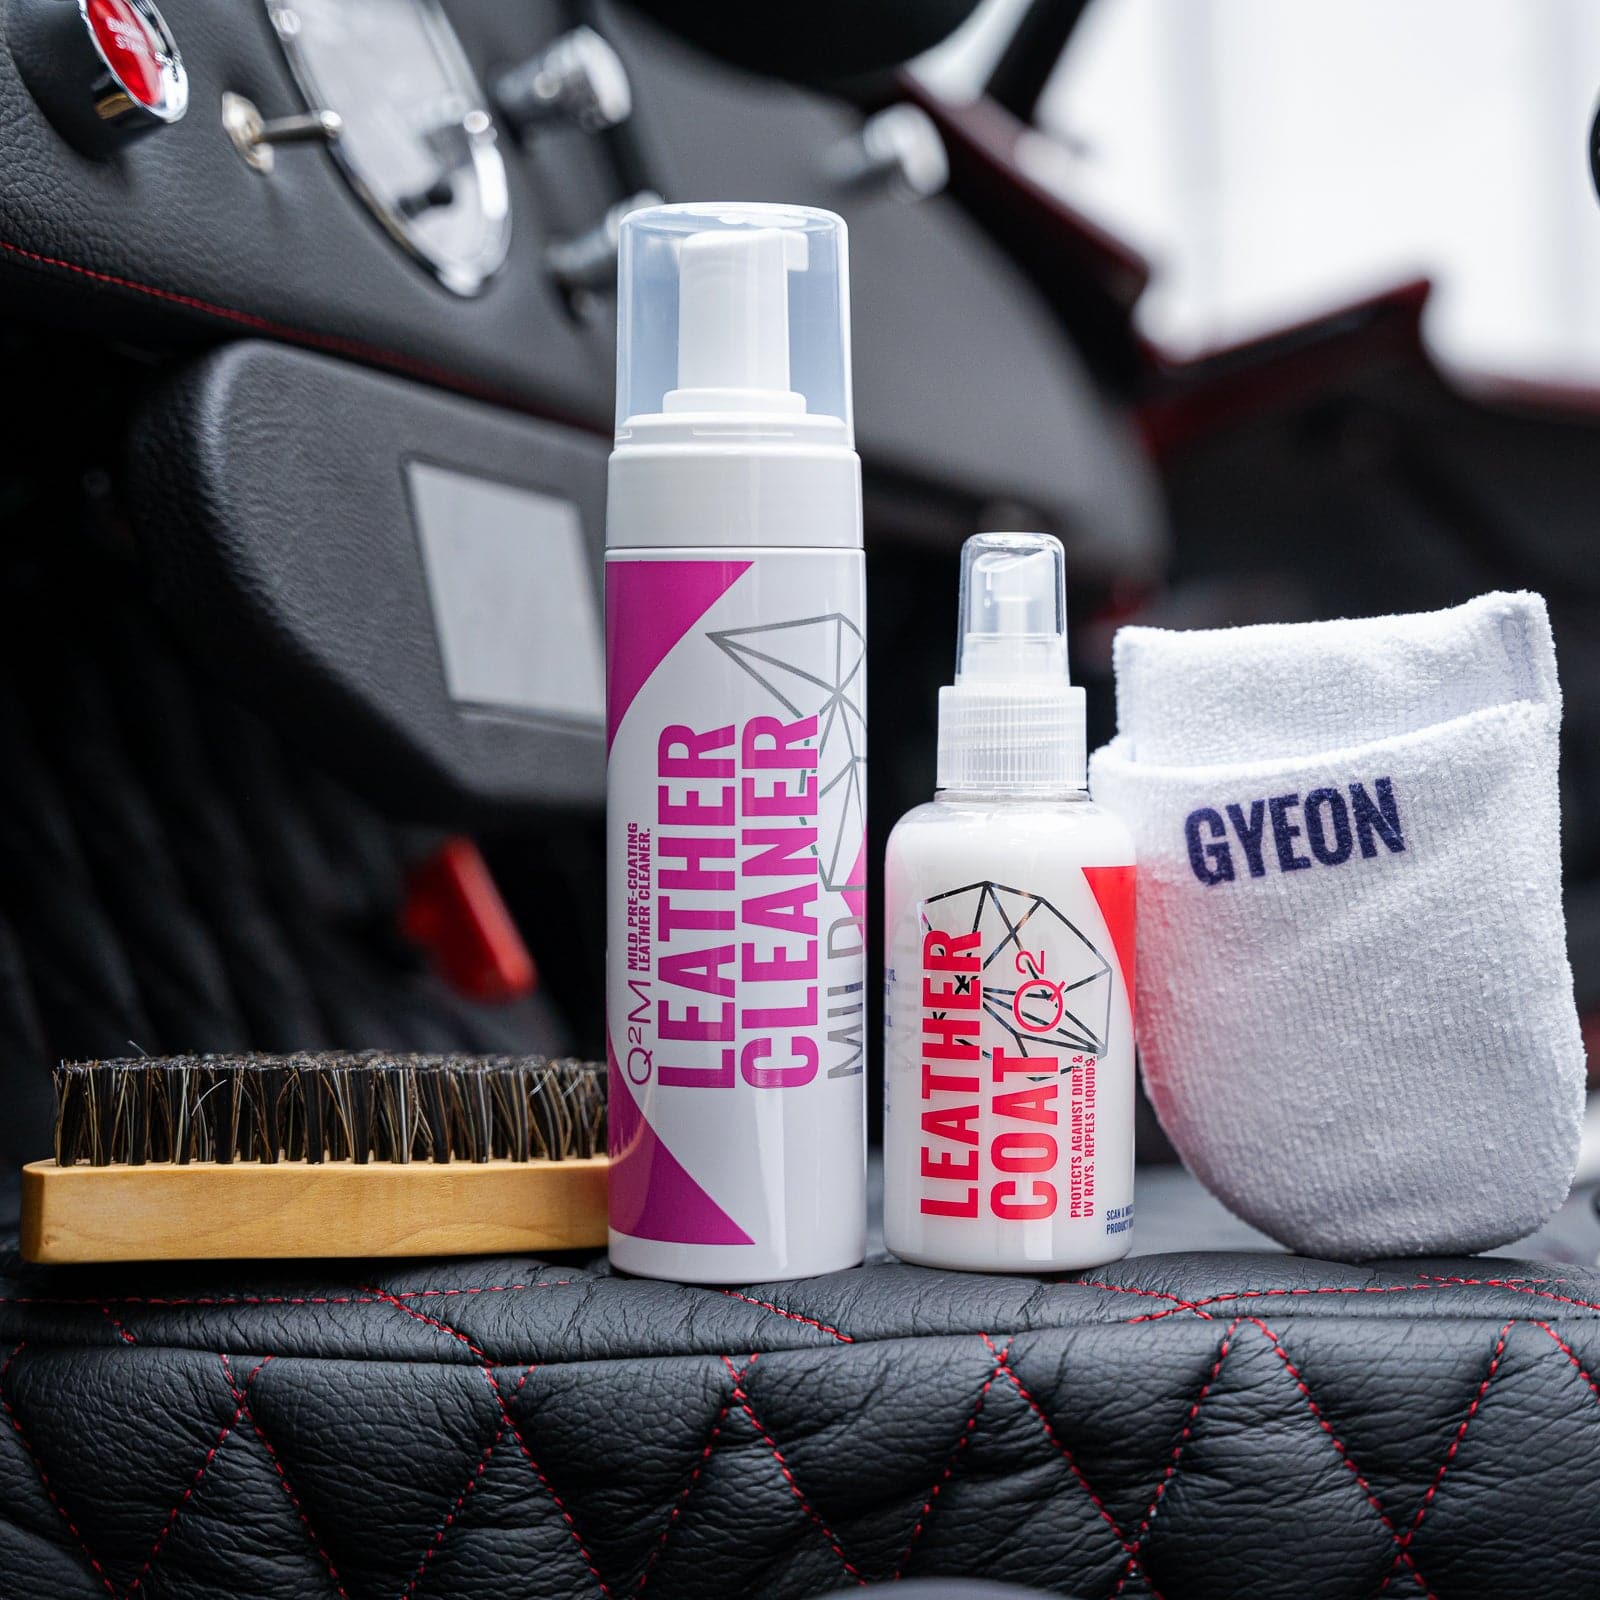 Gyeon Q²M Leather Set Mild - Car Care Europe